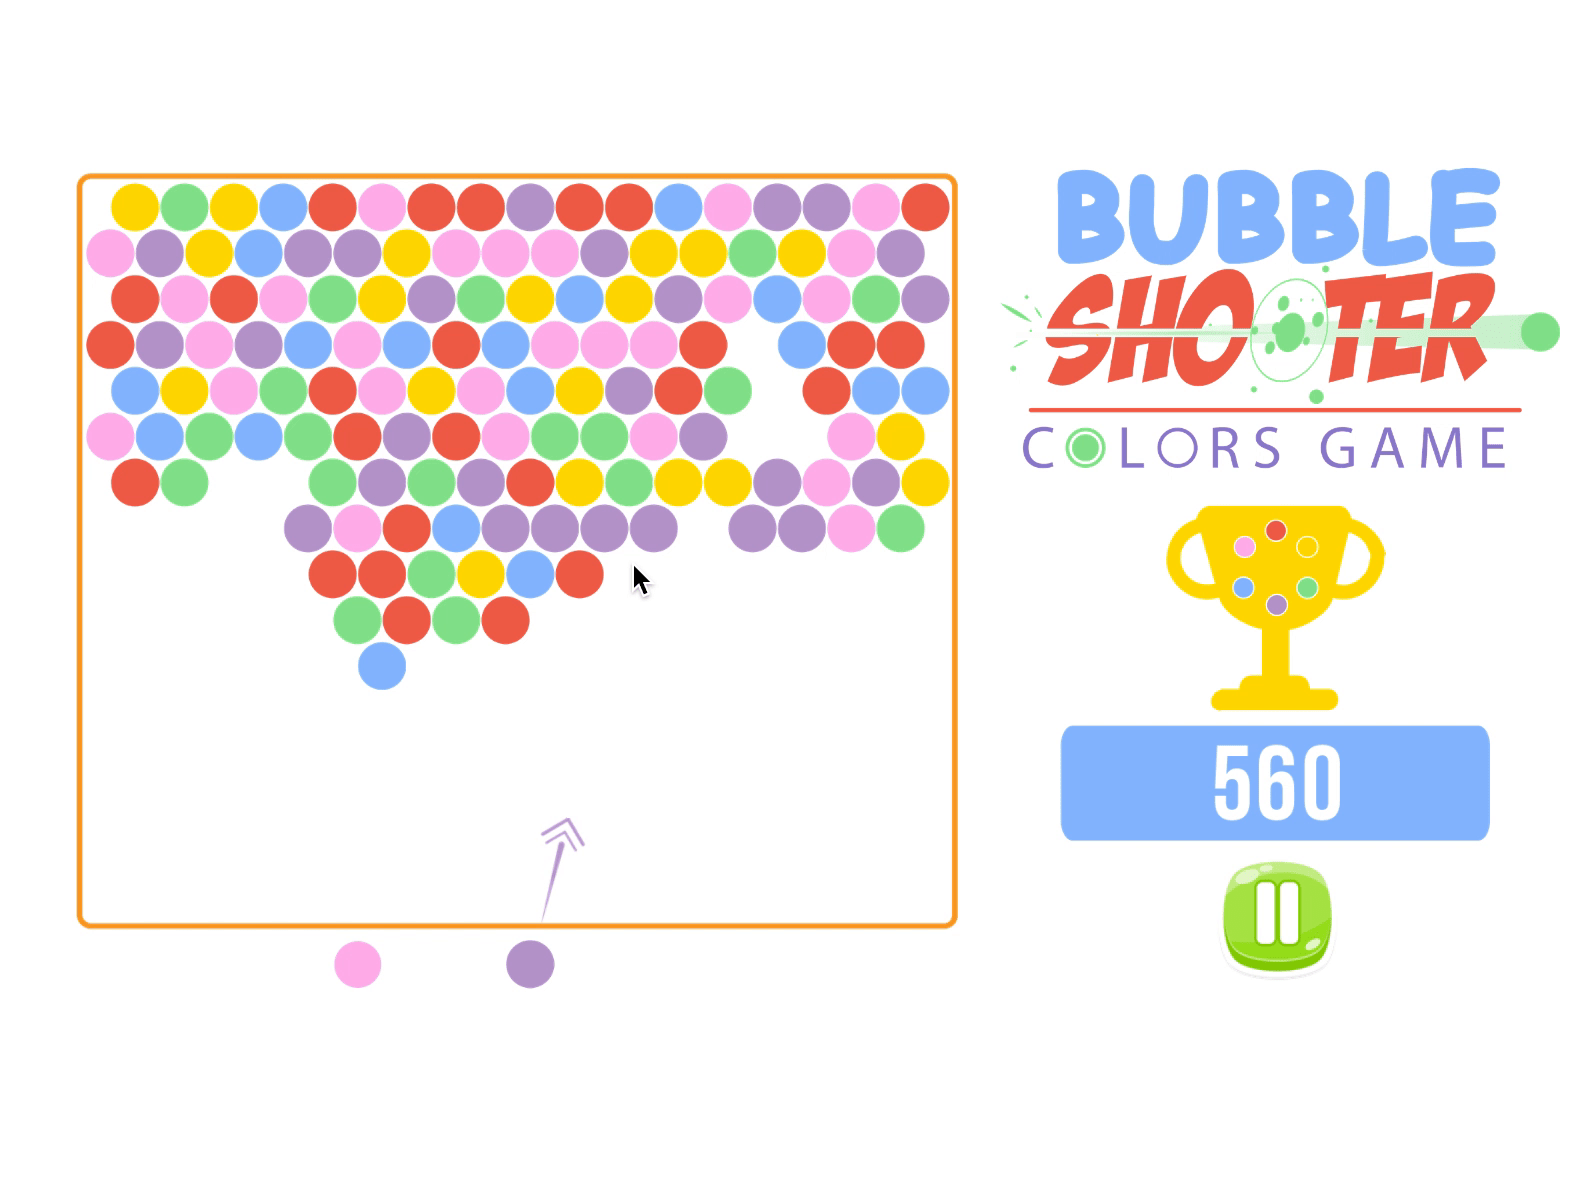 Bubble Shooter Colors Game Screenshot 13